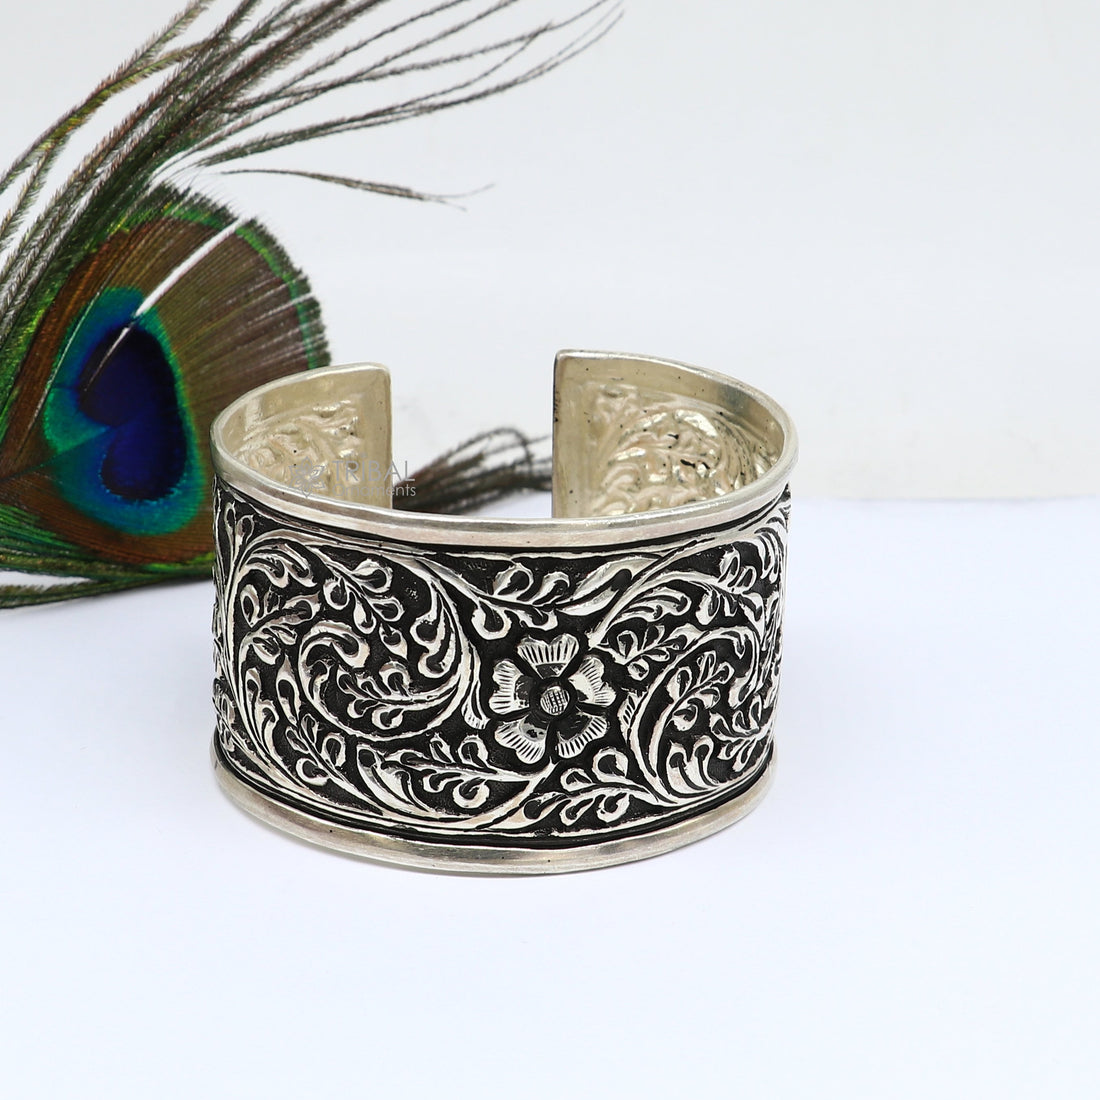 925 sterling silver adjustable tribal cuff bracelet, excellent wedding cuff bangle bracelet Tribal ethnic boho Navratri jewelry cuff189 - TRIBAL ORNAMENTS